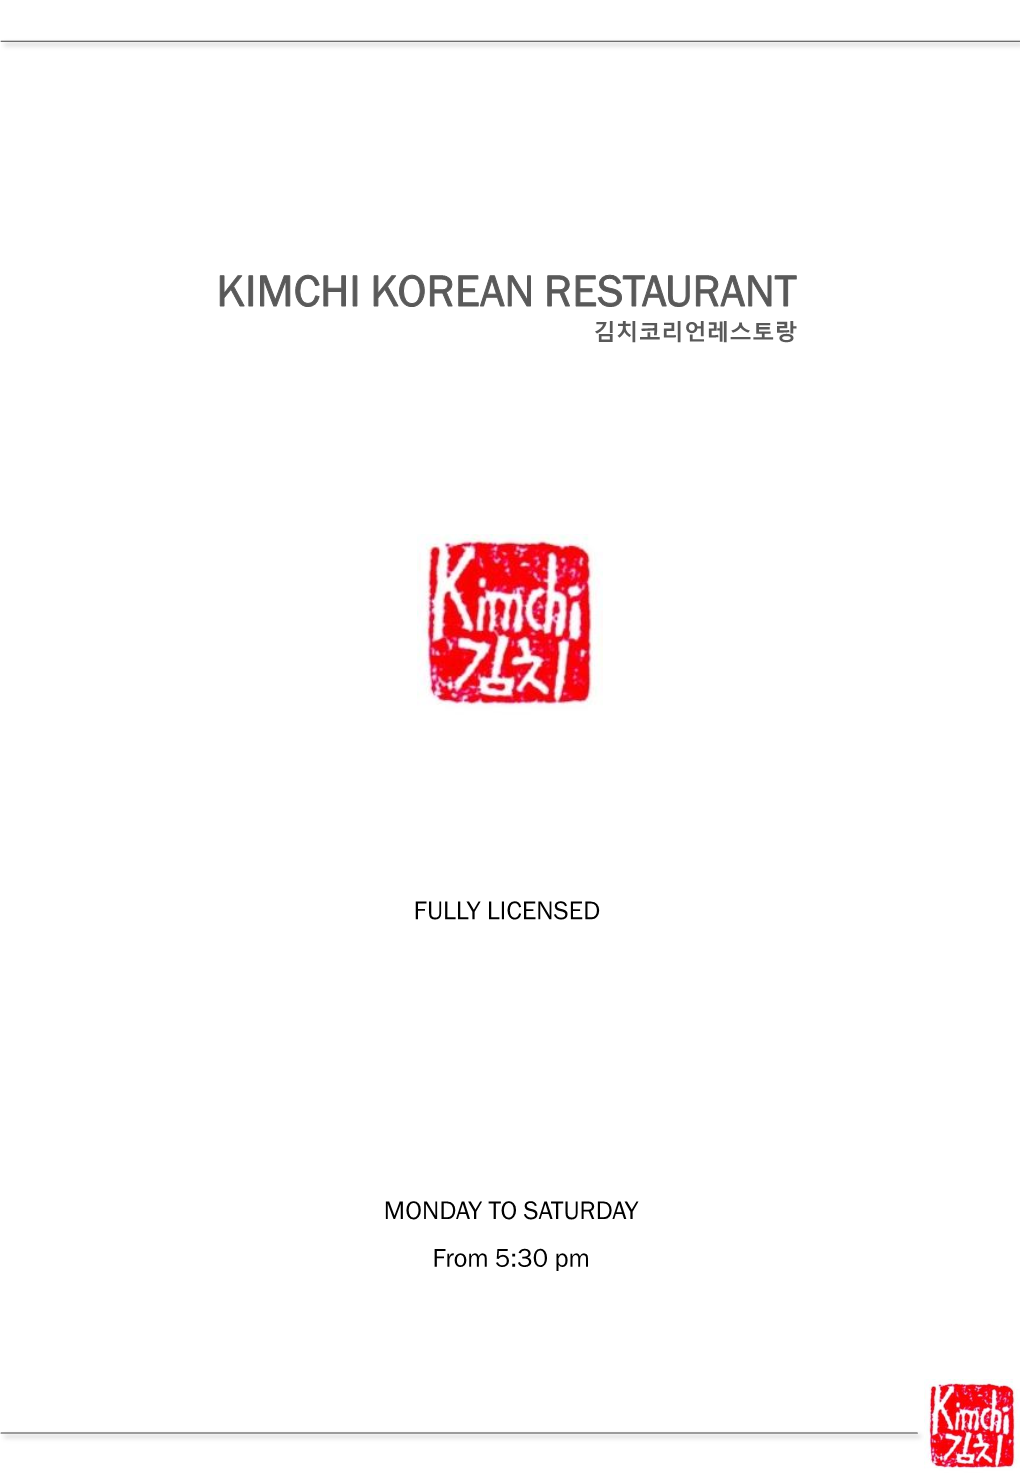 Kimchi Korean Restaurant 김치코리언레스토랑